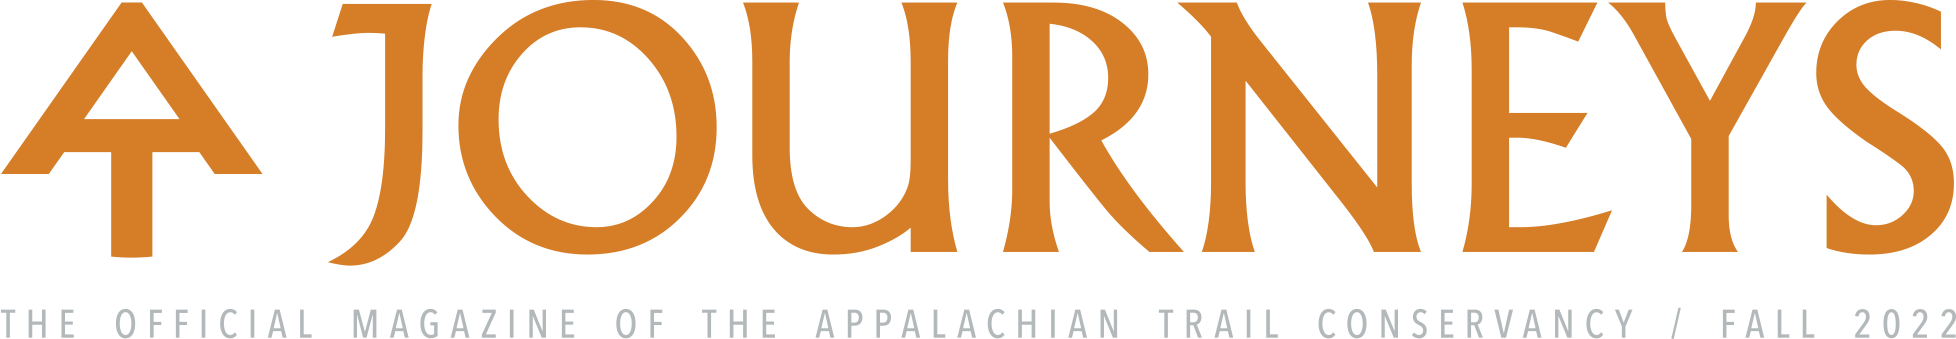 AT Journeys Text Logo in orange